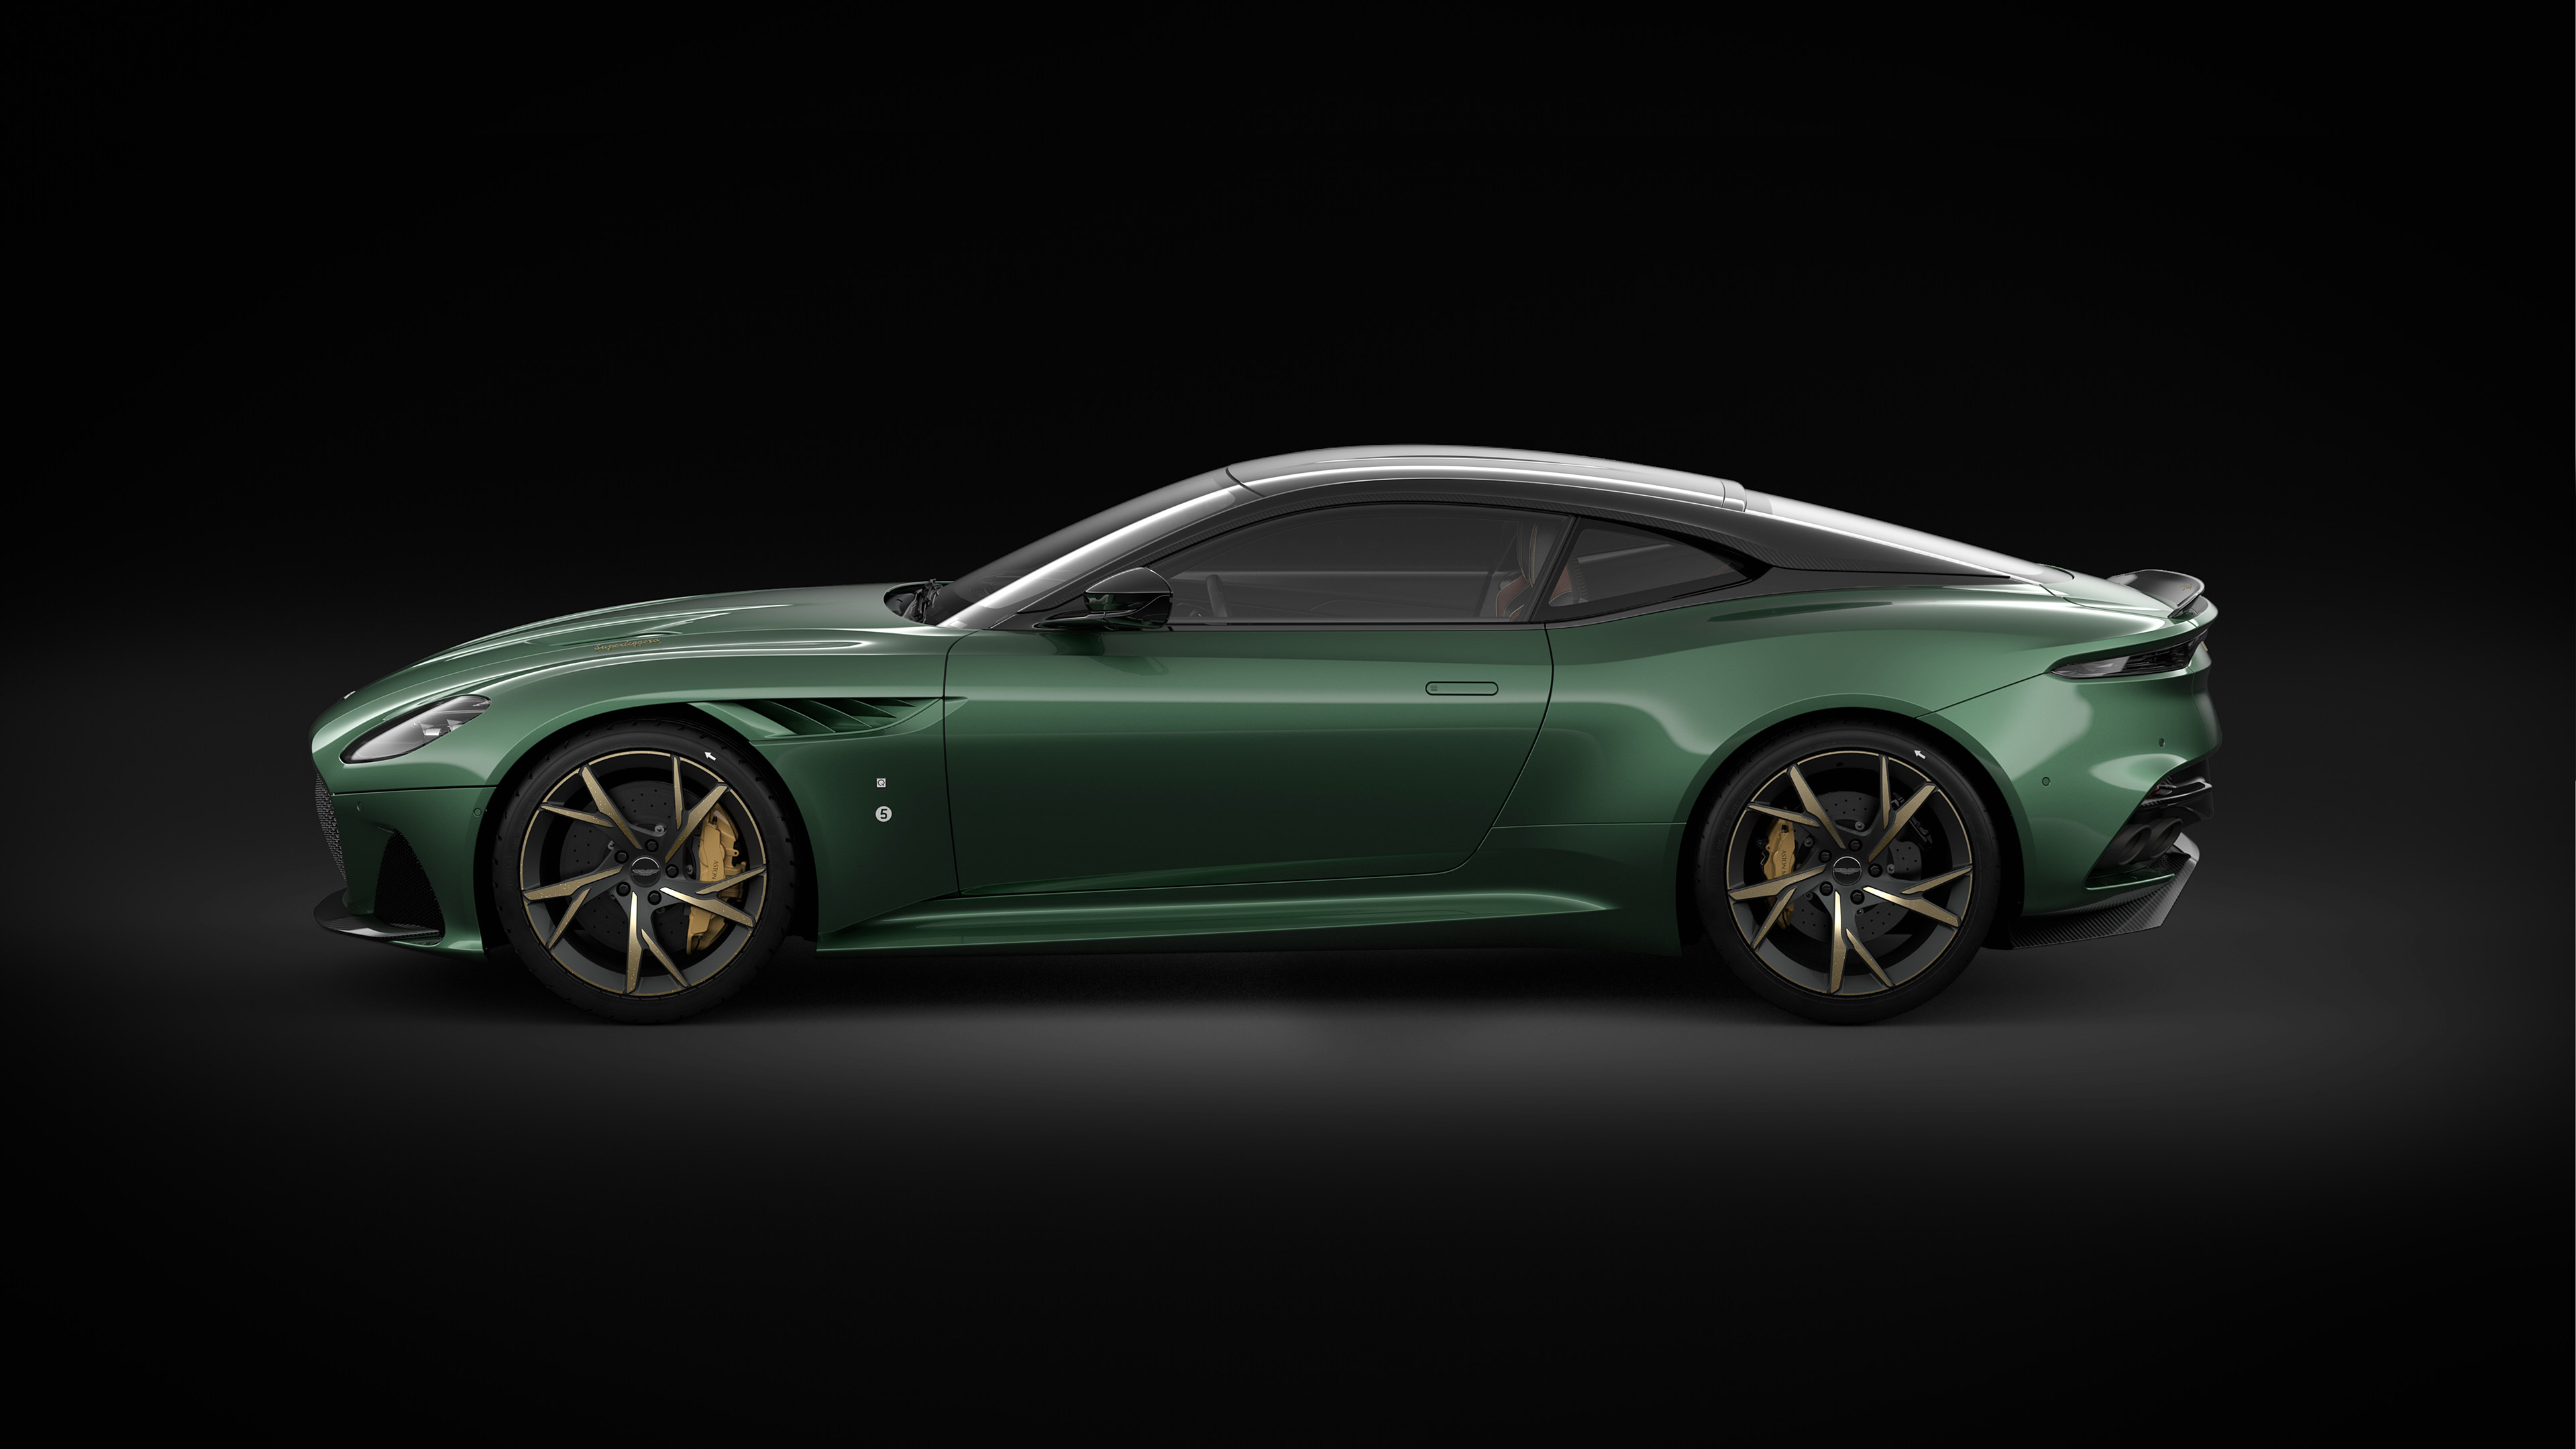 The Astonishing 2019 Aston Martin DBS 59